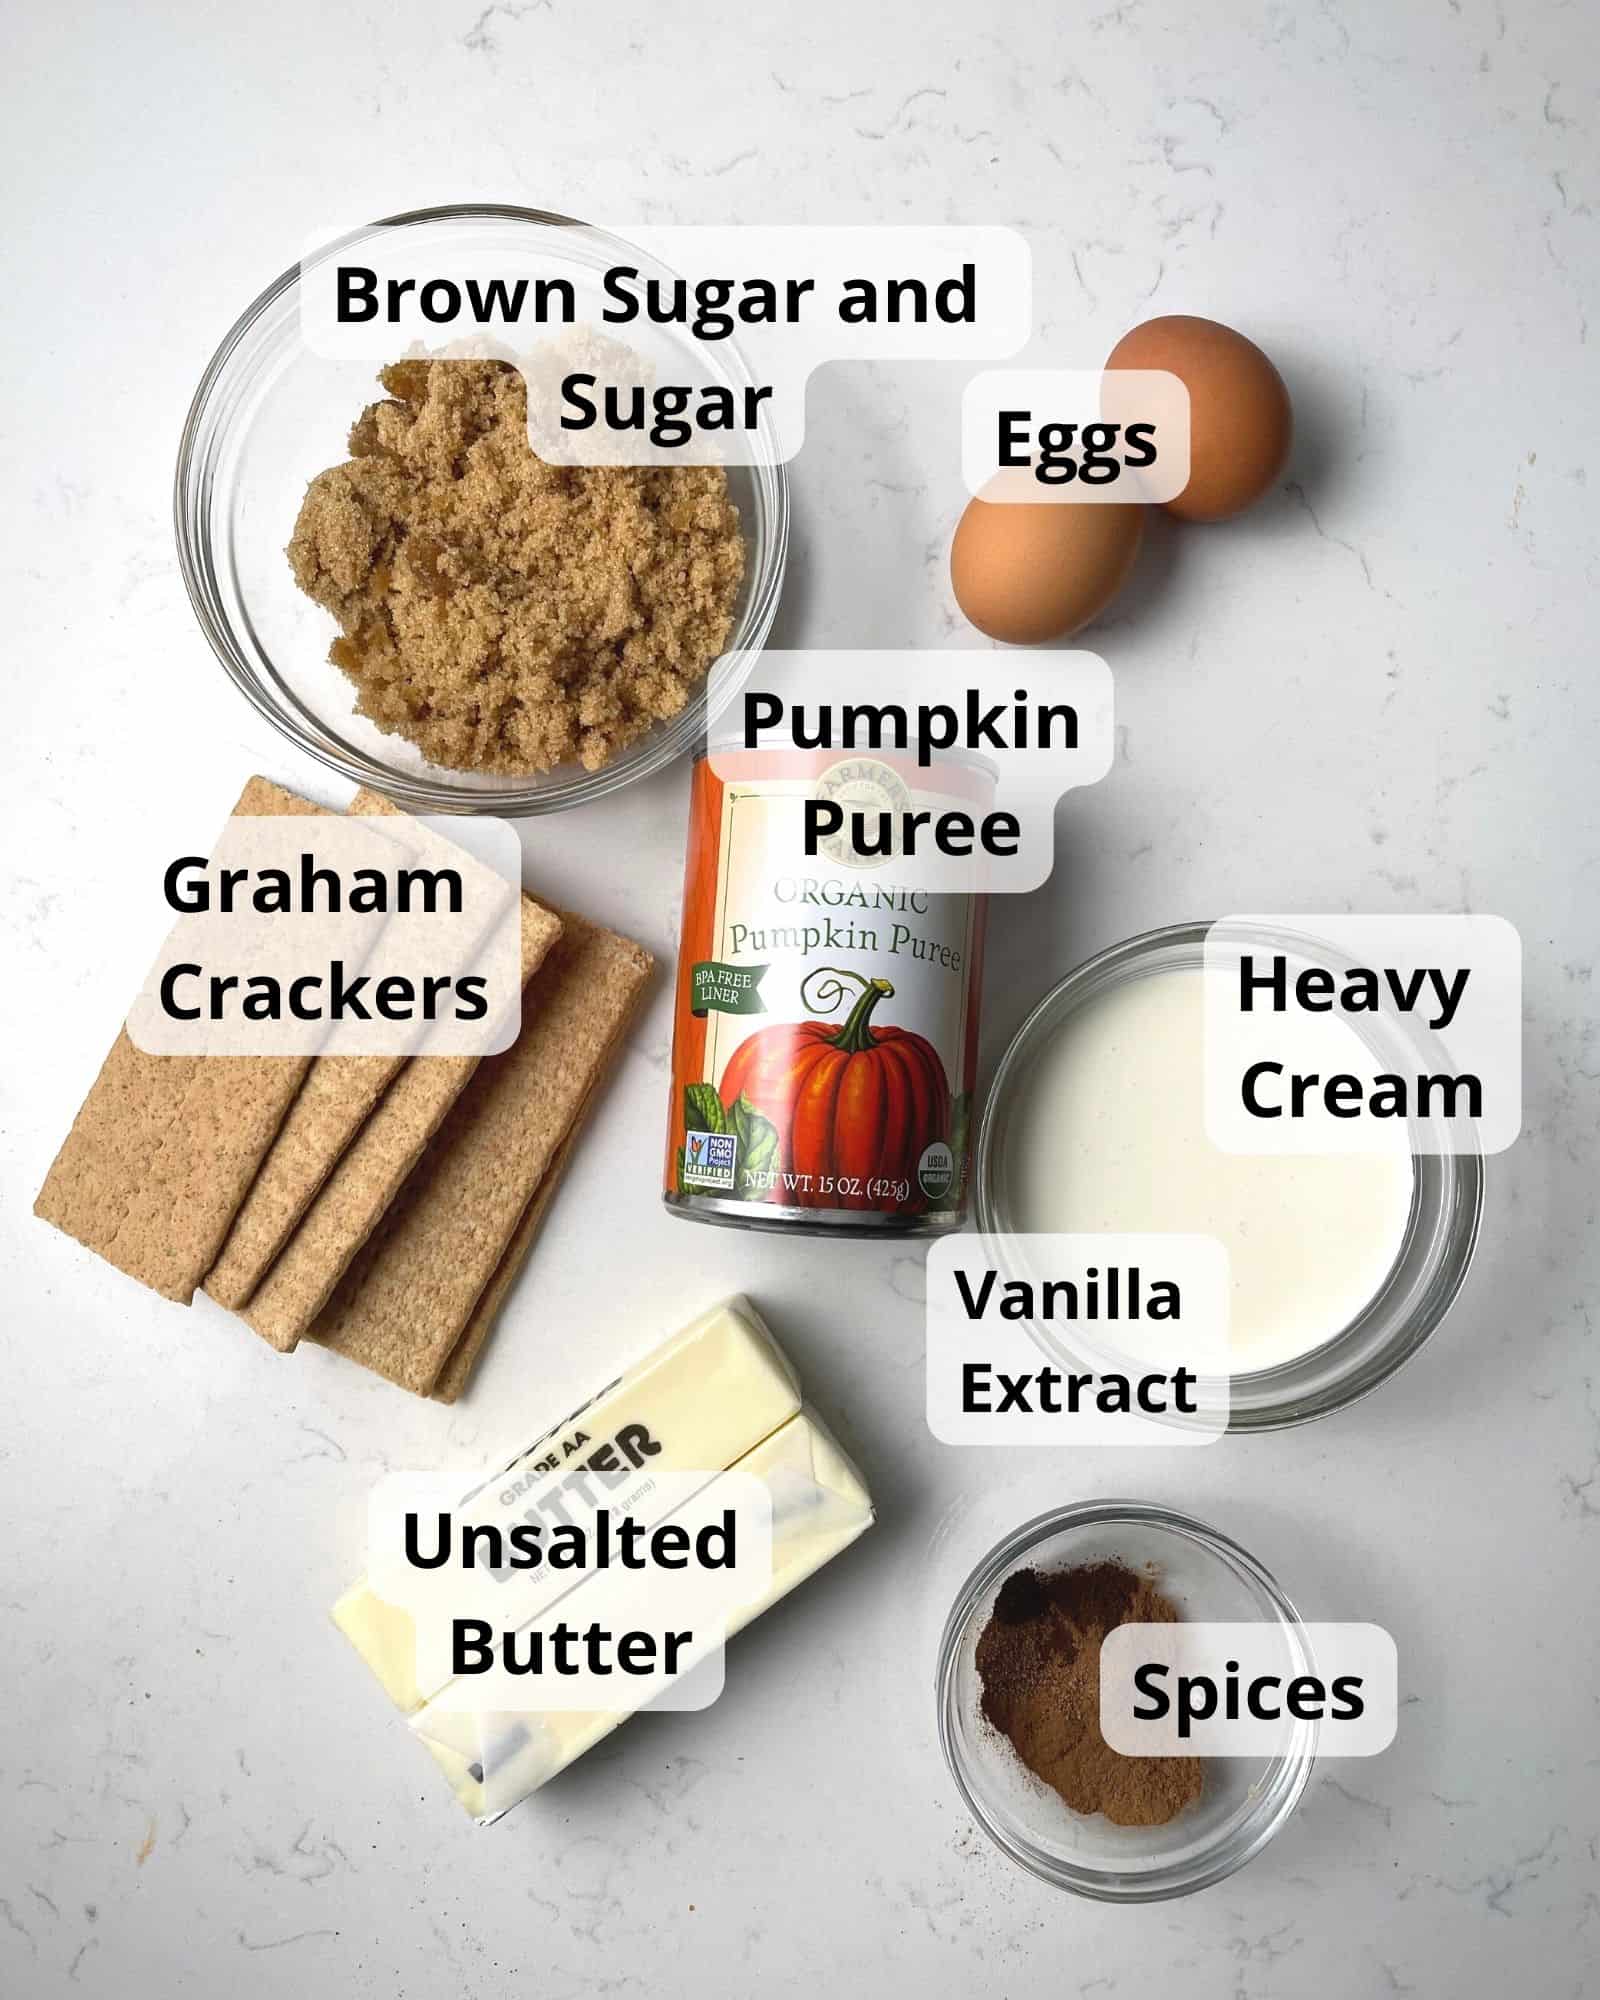 ingredients to make pumpkin pie with graham cracker crust - brown sugar, sugar, eggs, pumpkin puree, heavy cream, vanilla extract, unsalted butter, spices, and graham crackers.